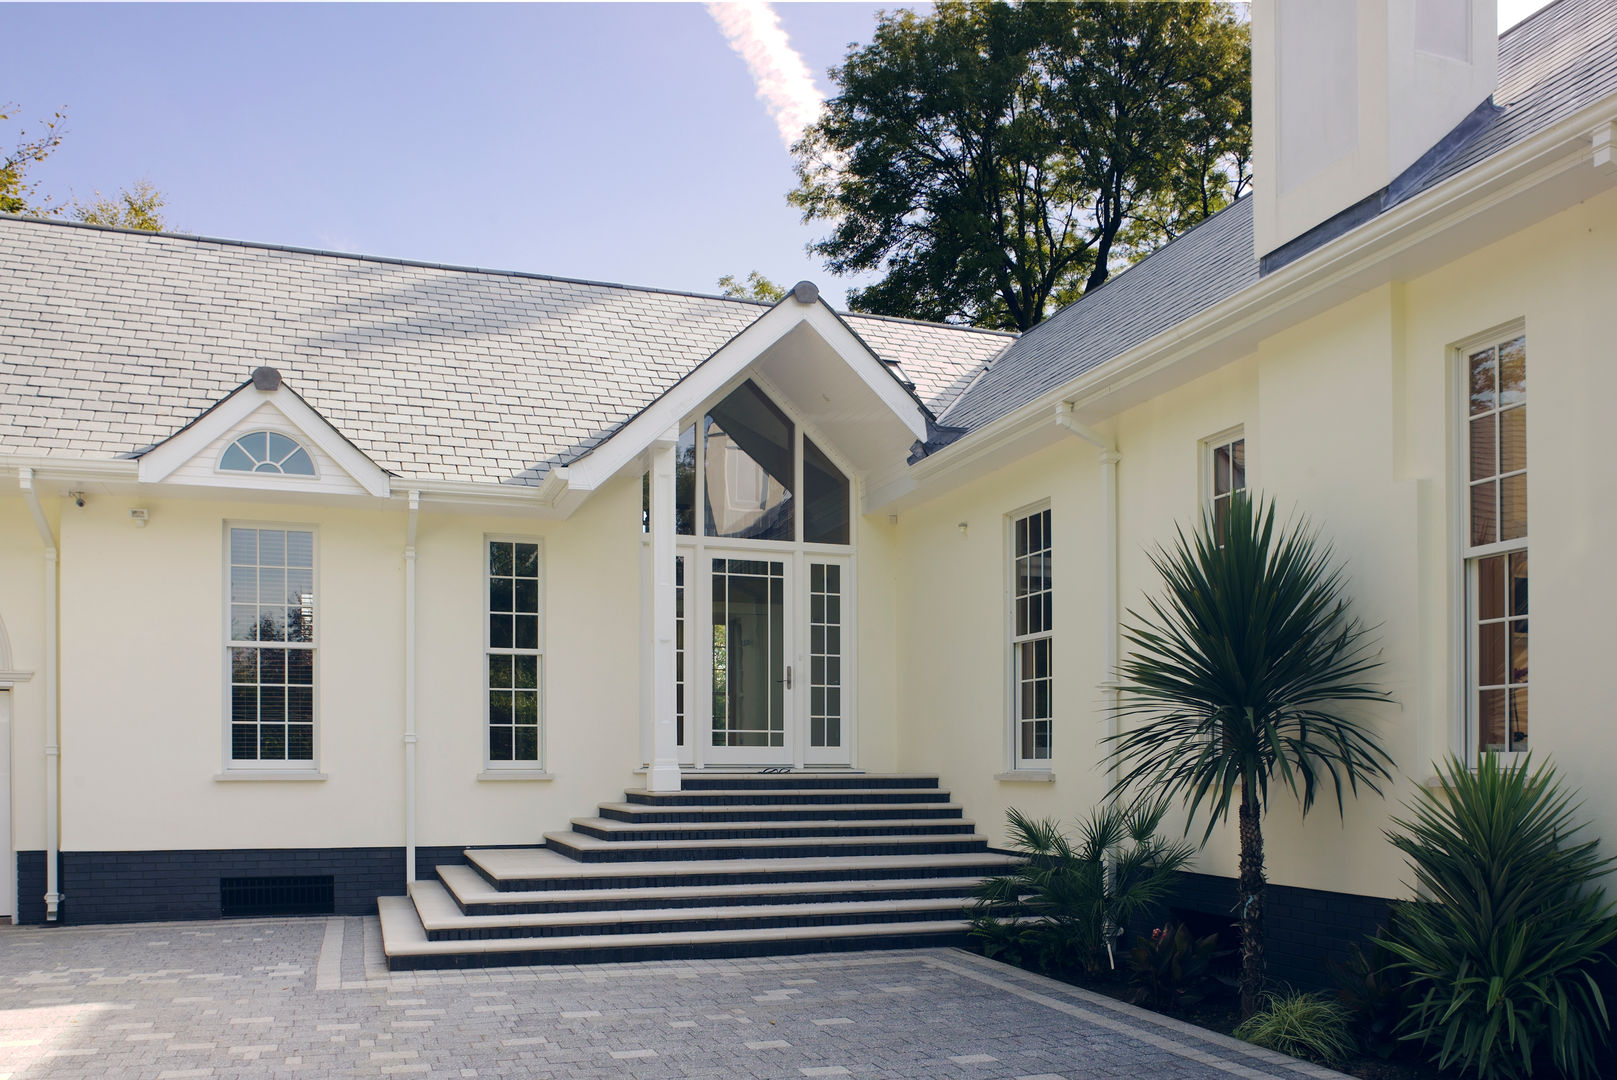 Neo Classical Design For New Build Family Home, Marvin Windows and Doors UK Marvin Windows and Doors UK Puertas y ventanas de estilo clásico